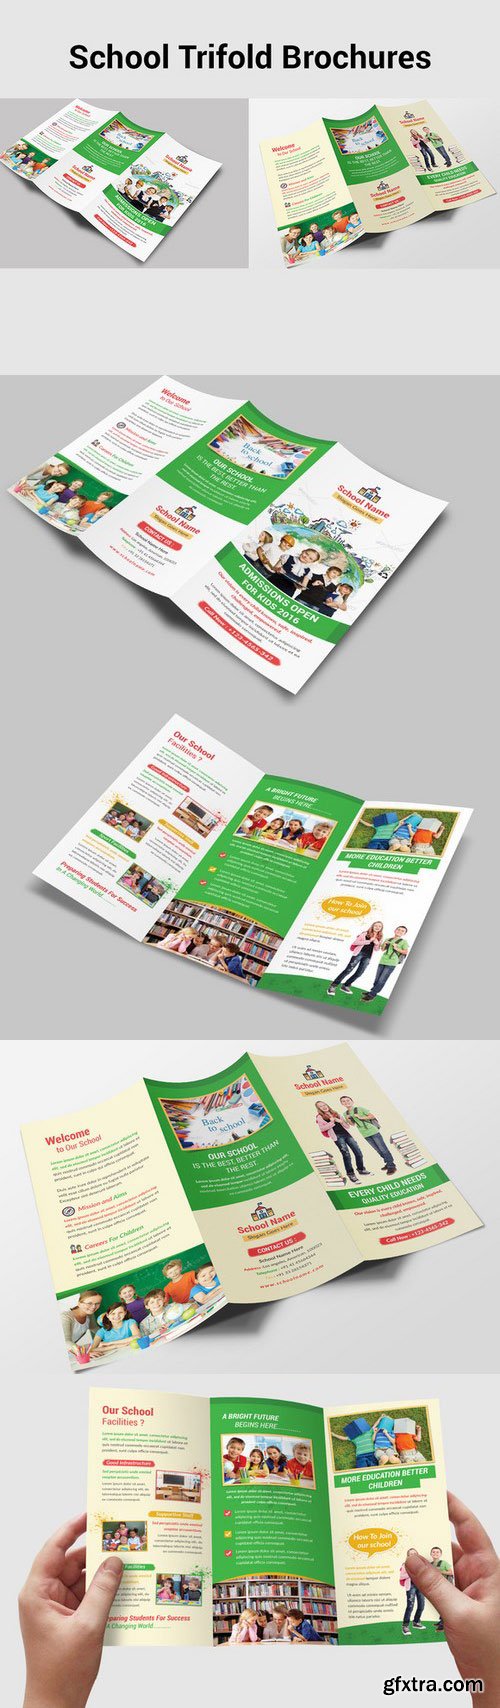 CM - School Trifold Brochures 650899